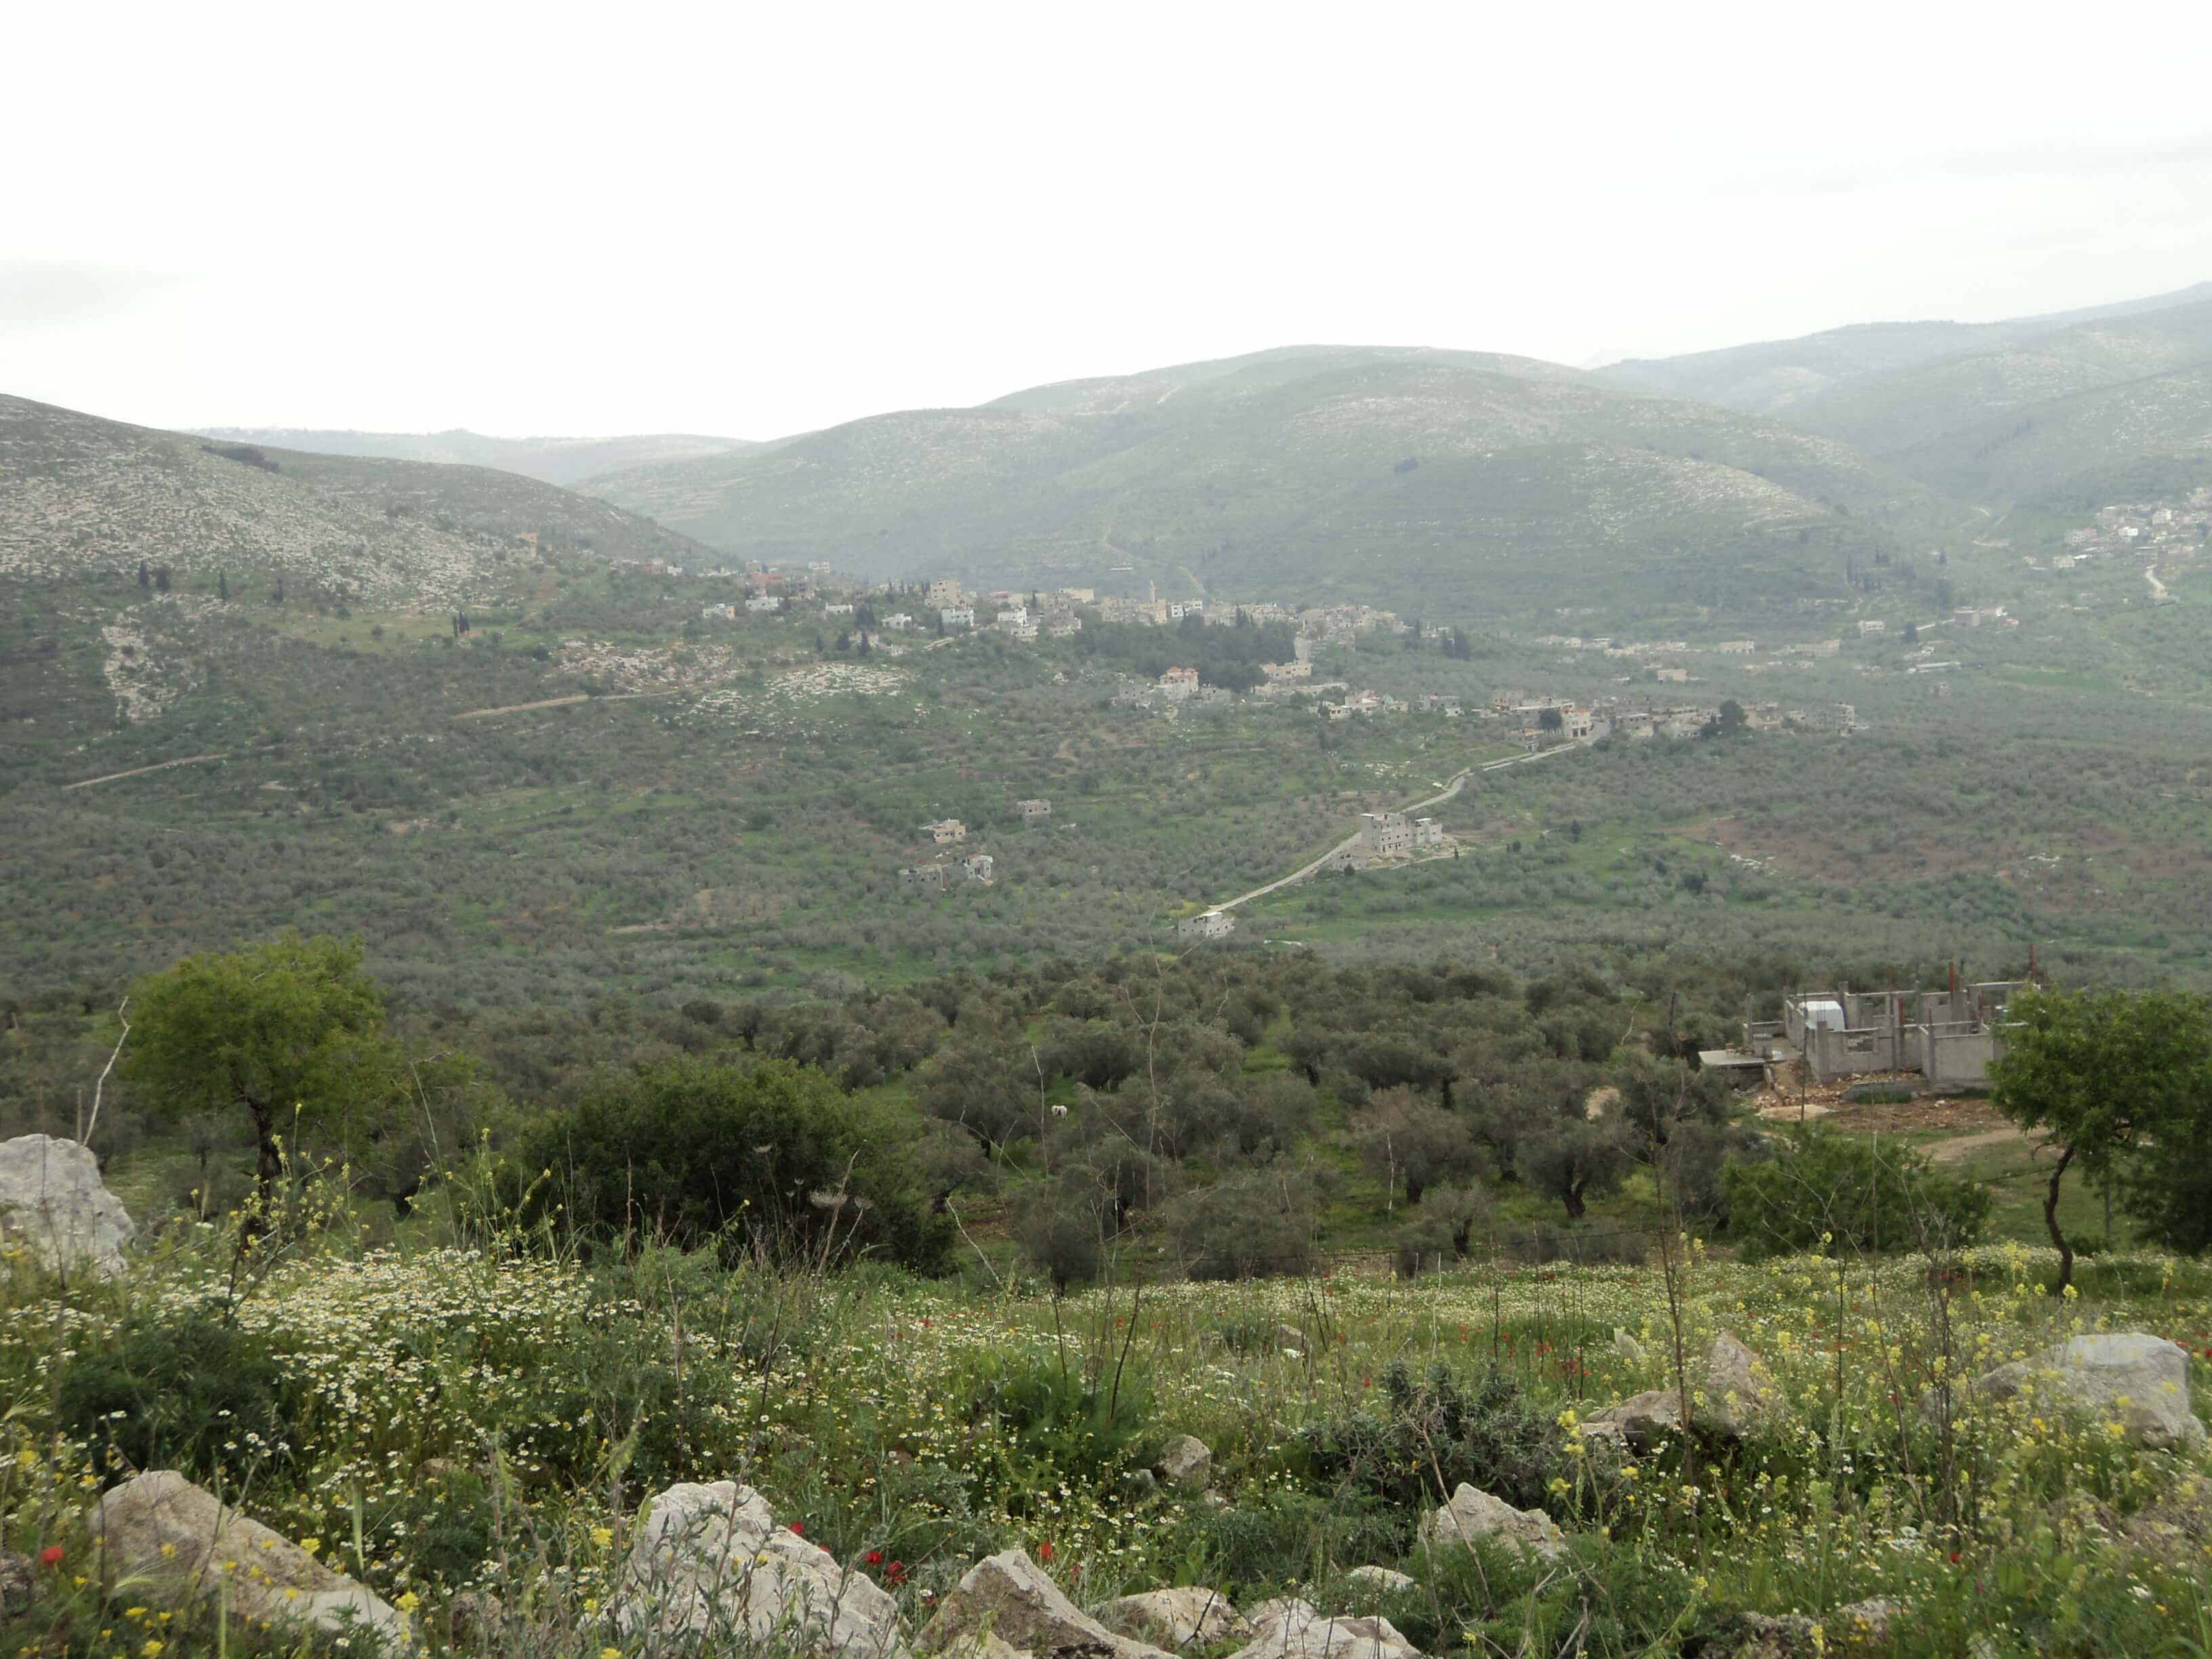 The beautiful hills of Palestine. By: Randa Abdel-Fattah.